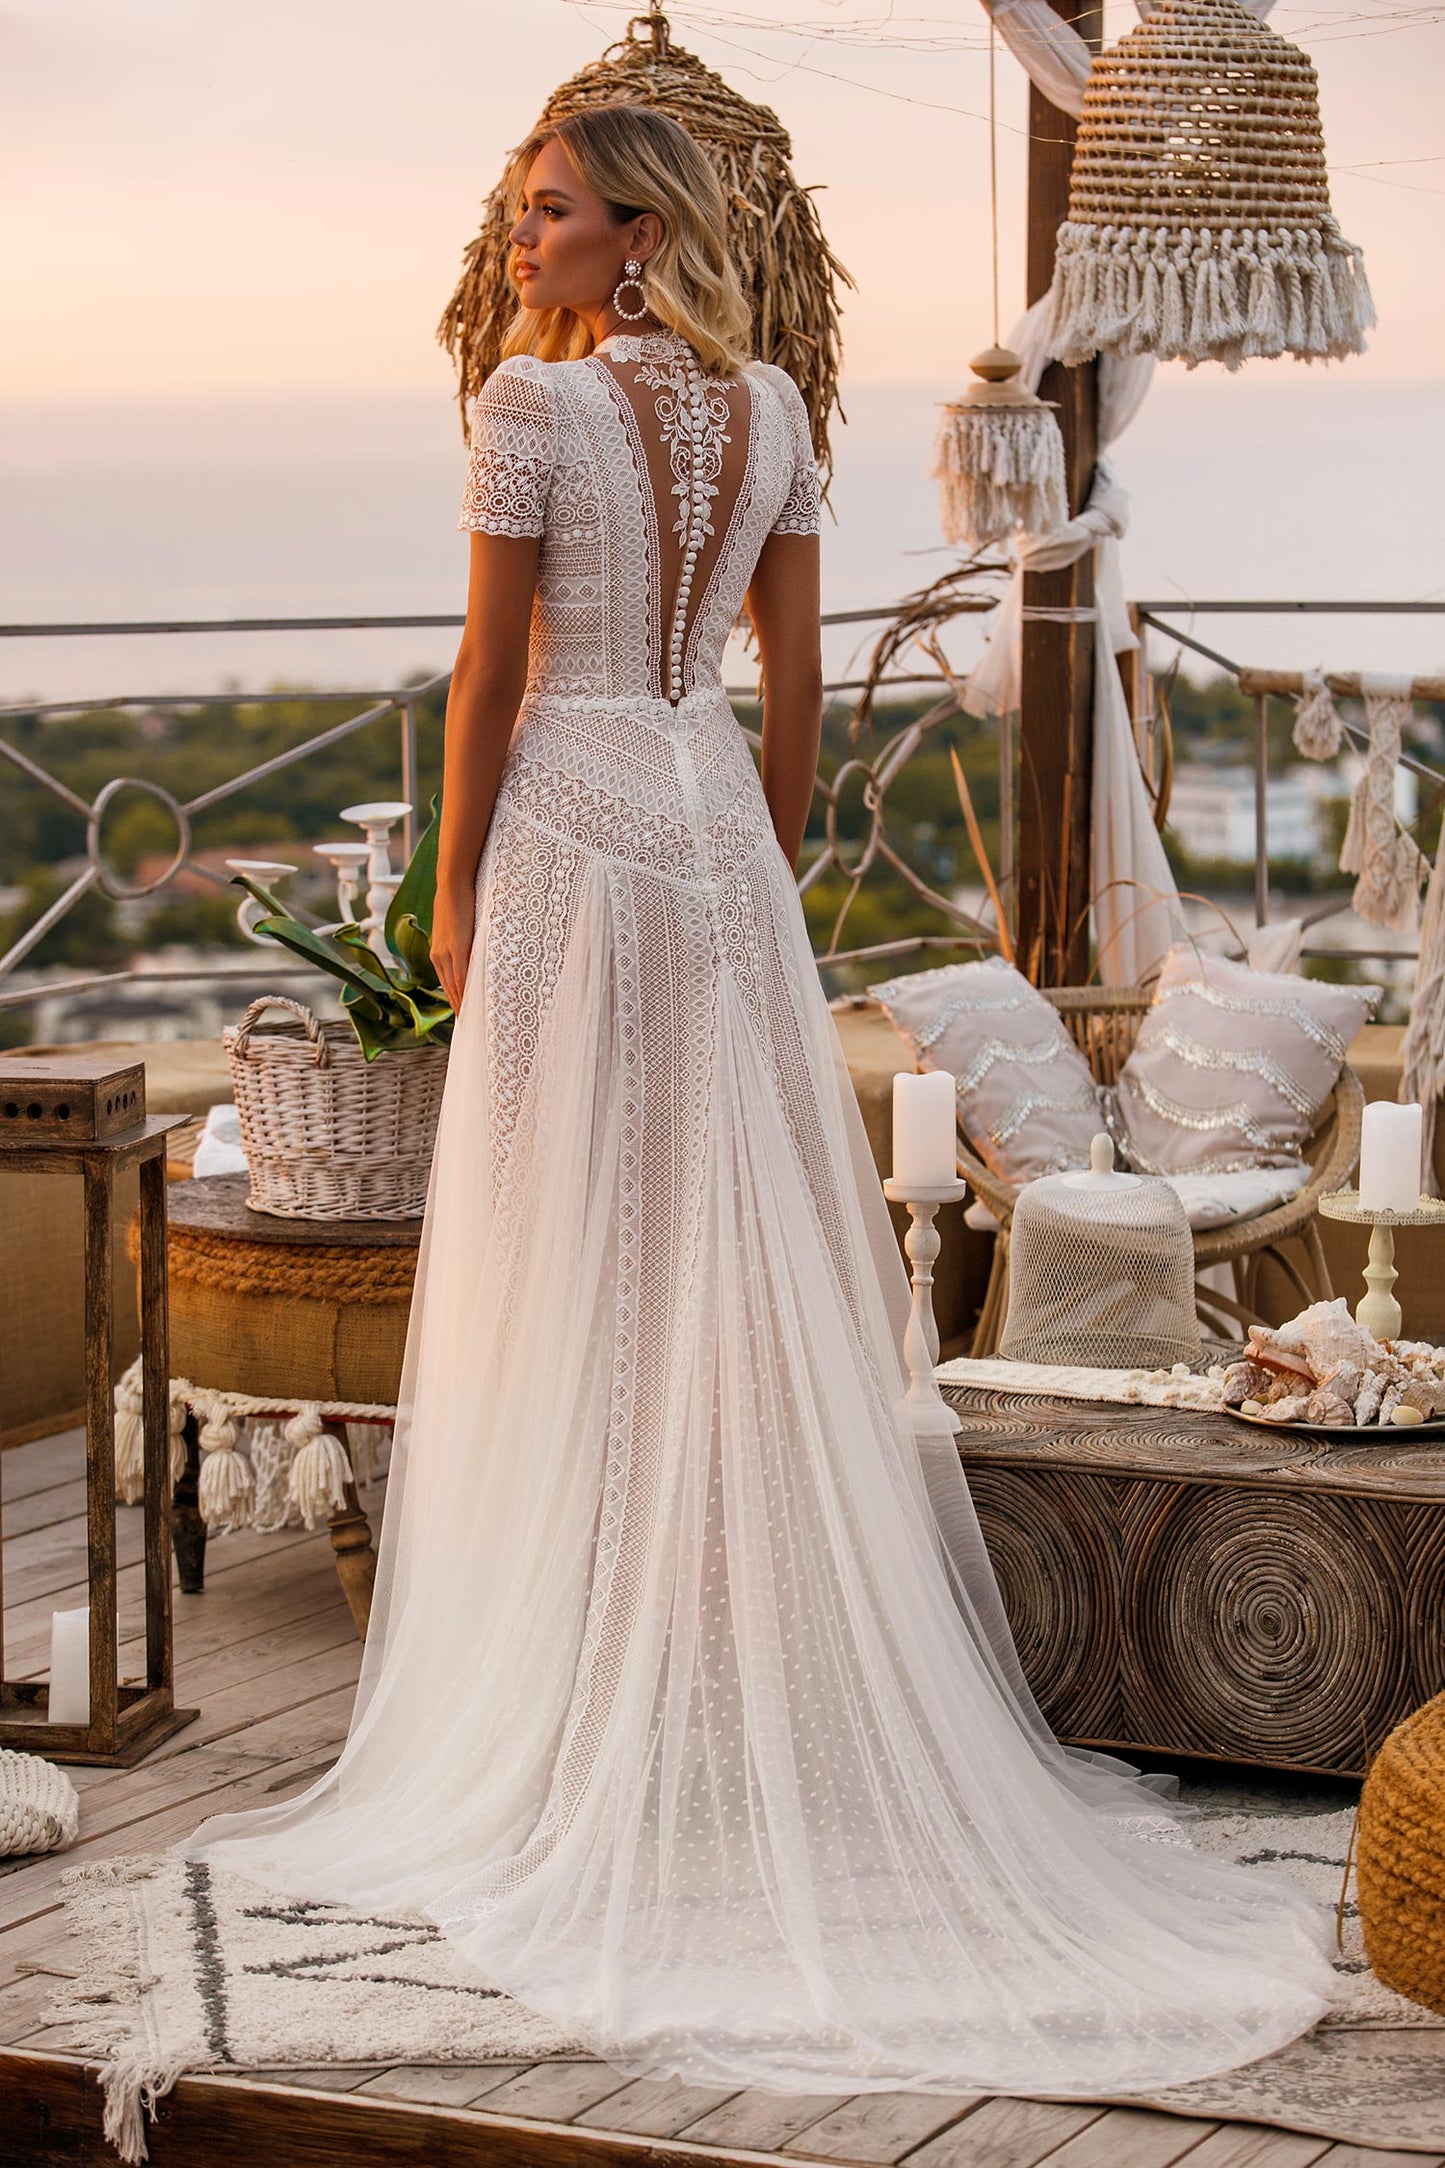 Wedding Dress| Miamigirlfriends| Alexiya